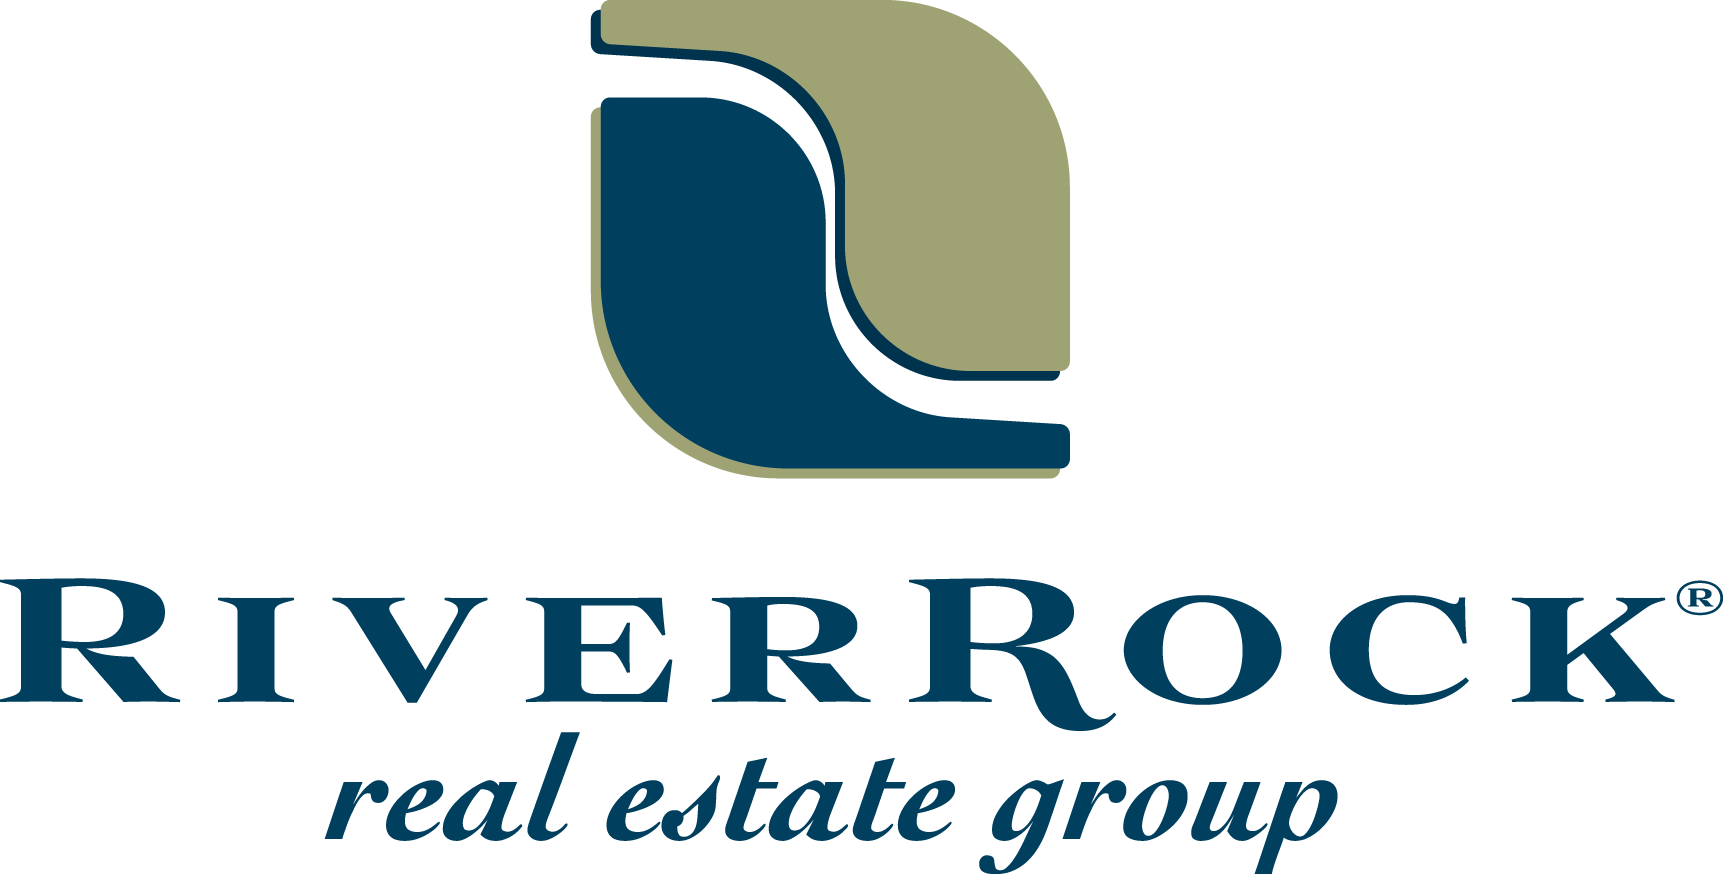 RiverRock Real Estate Group logo